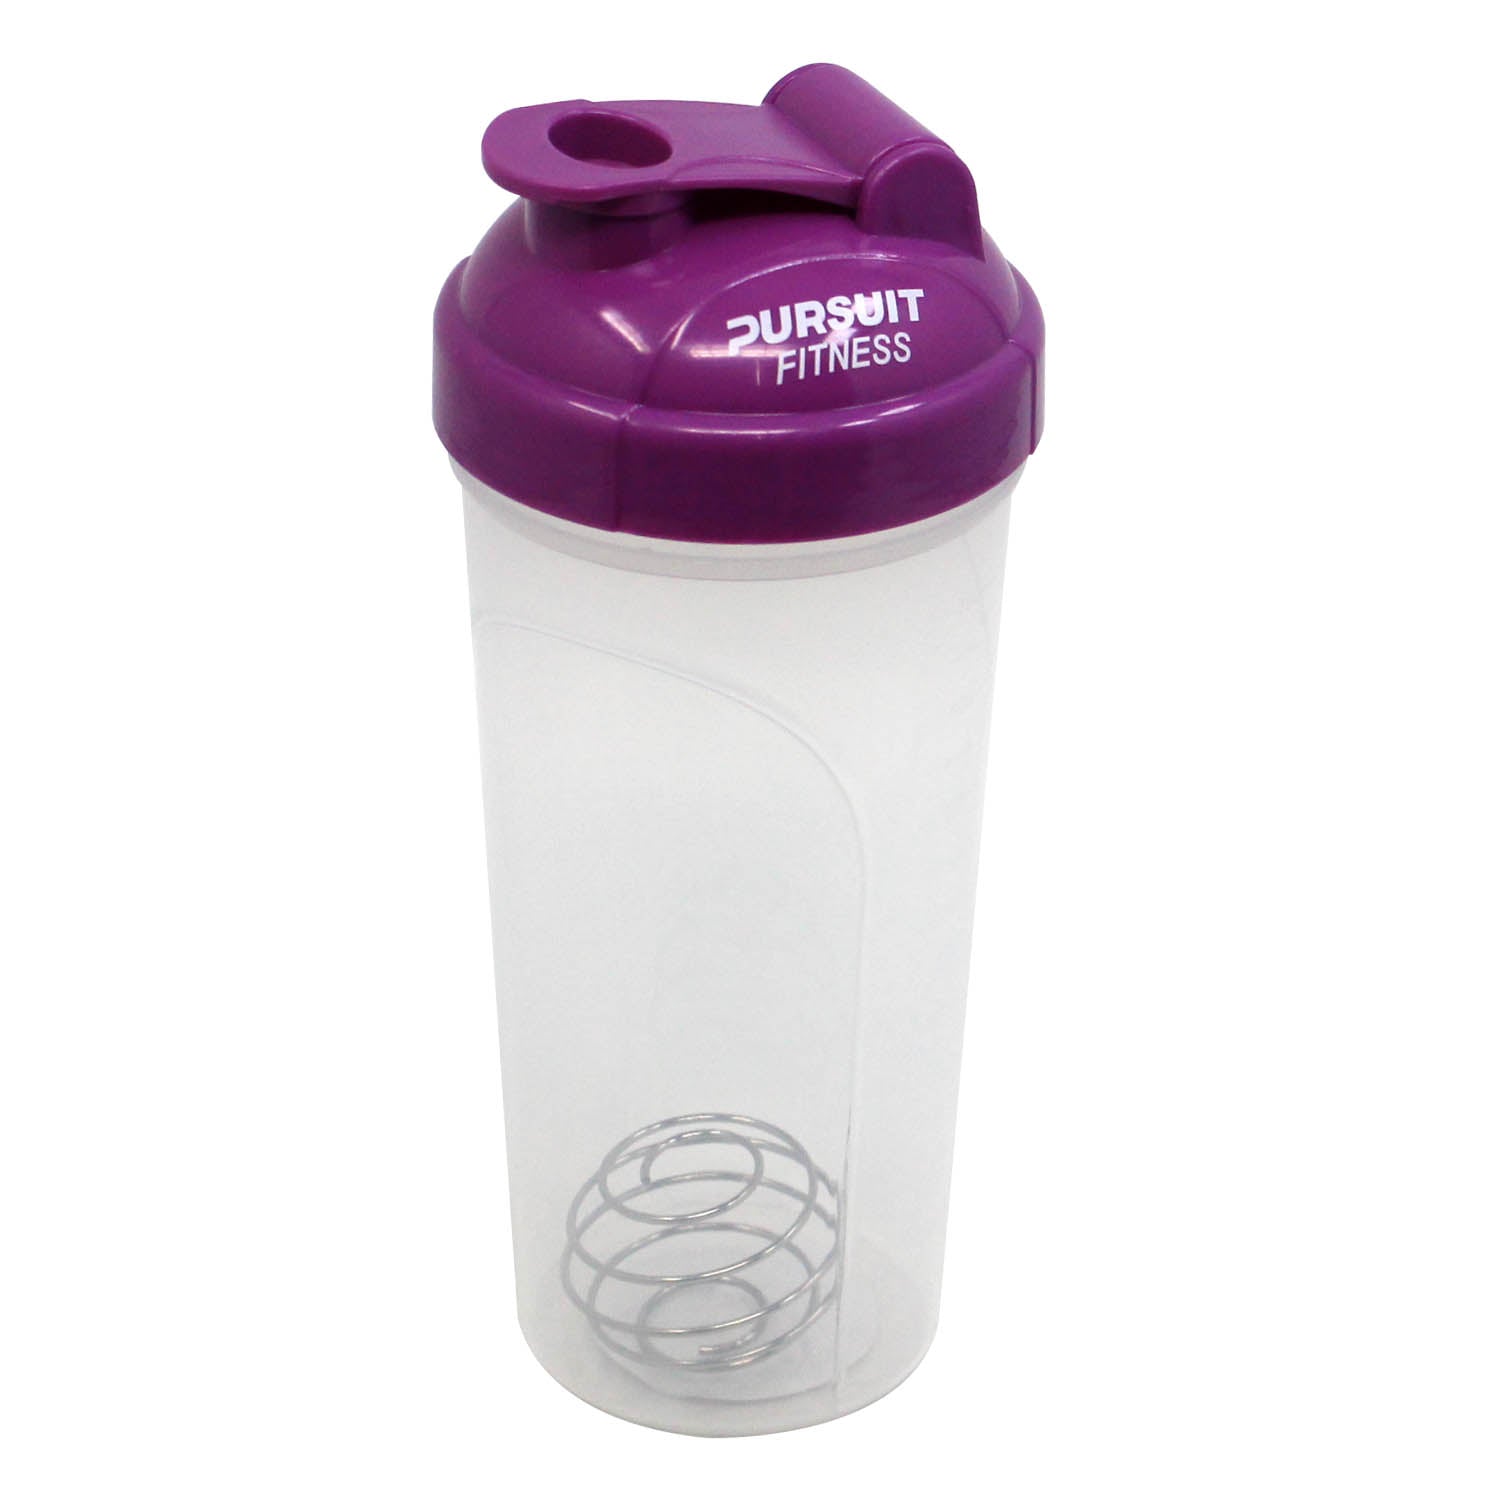 Pursuit Fitness 700ml Purple Protein Shaker Bottle